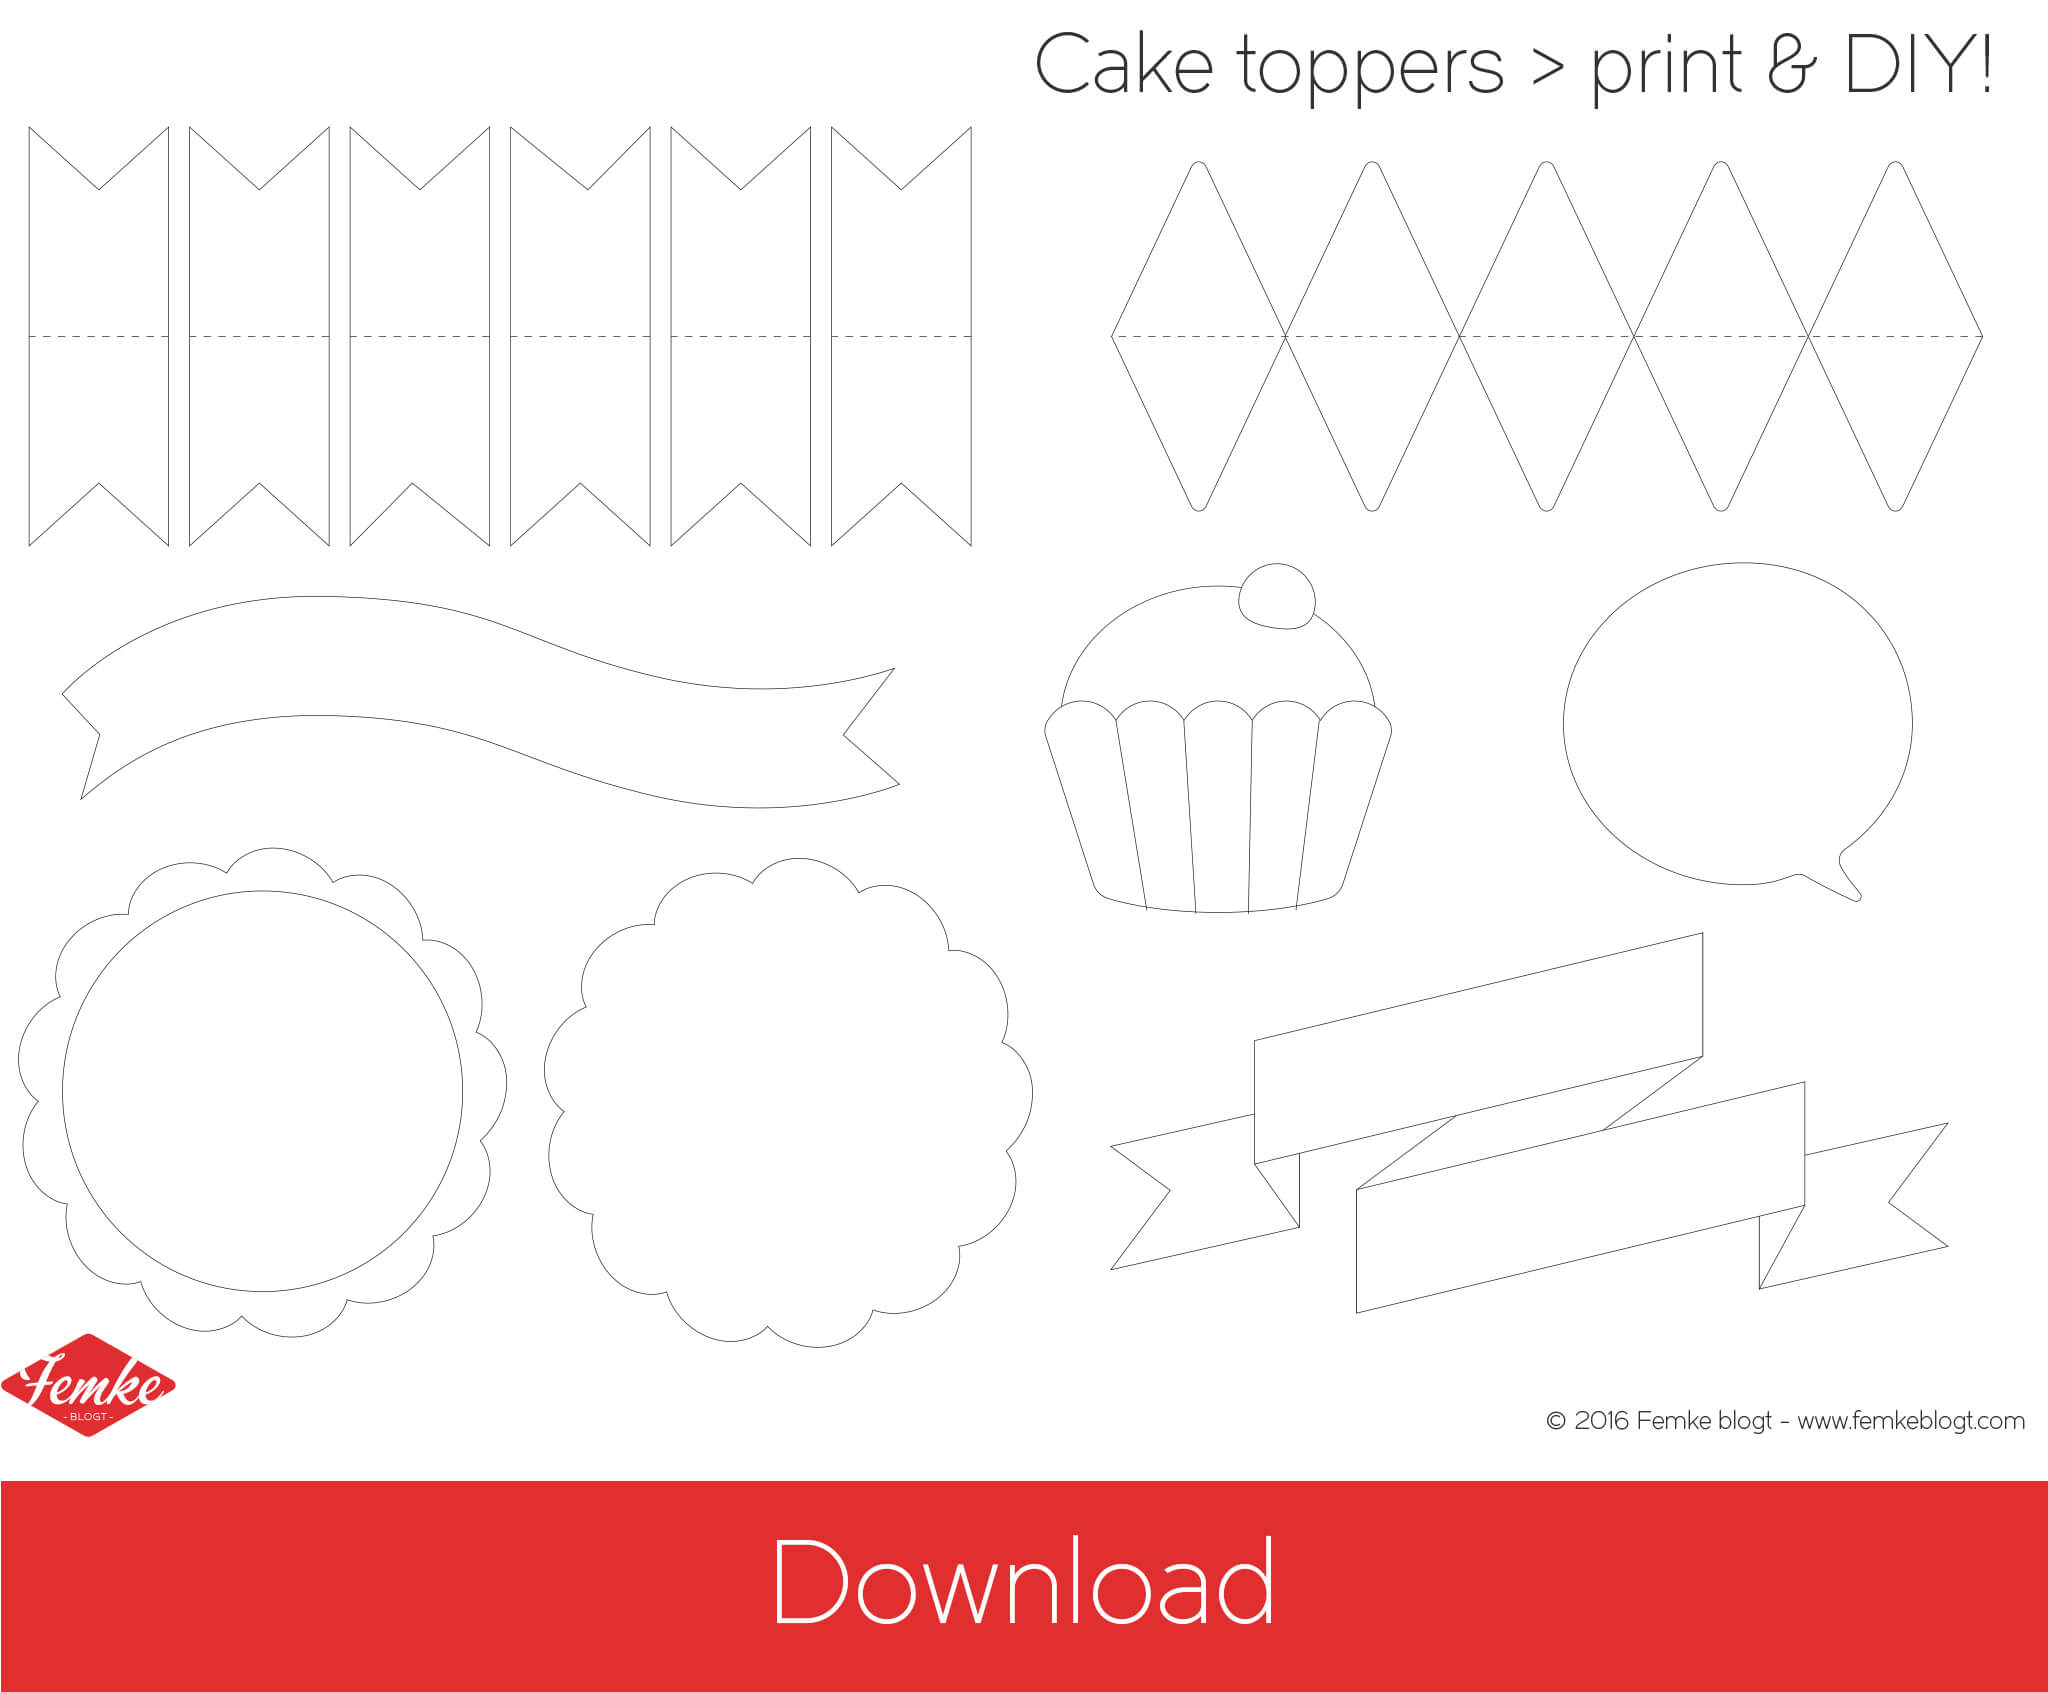 Download printable DIY cake topper